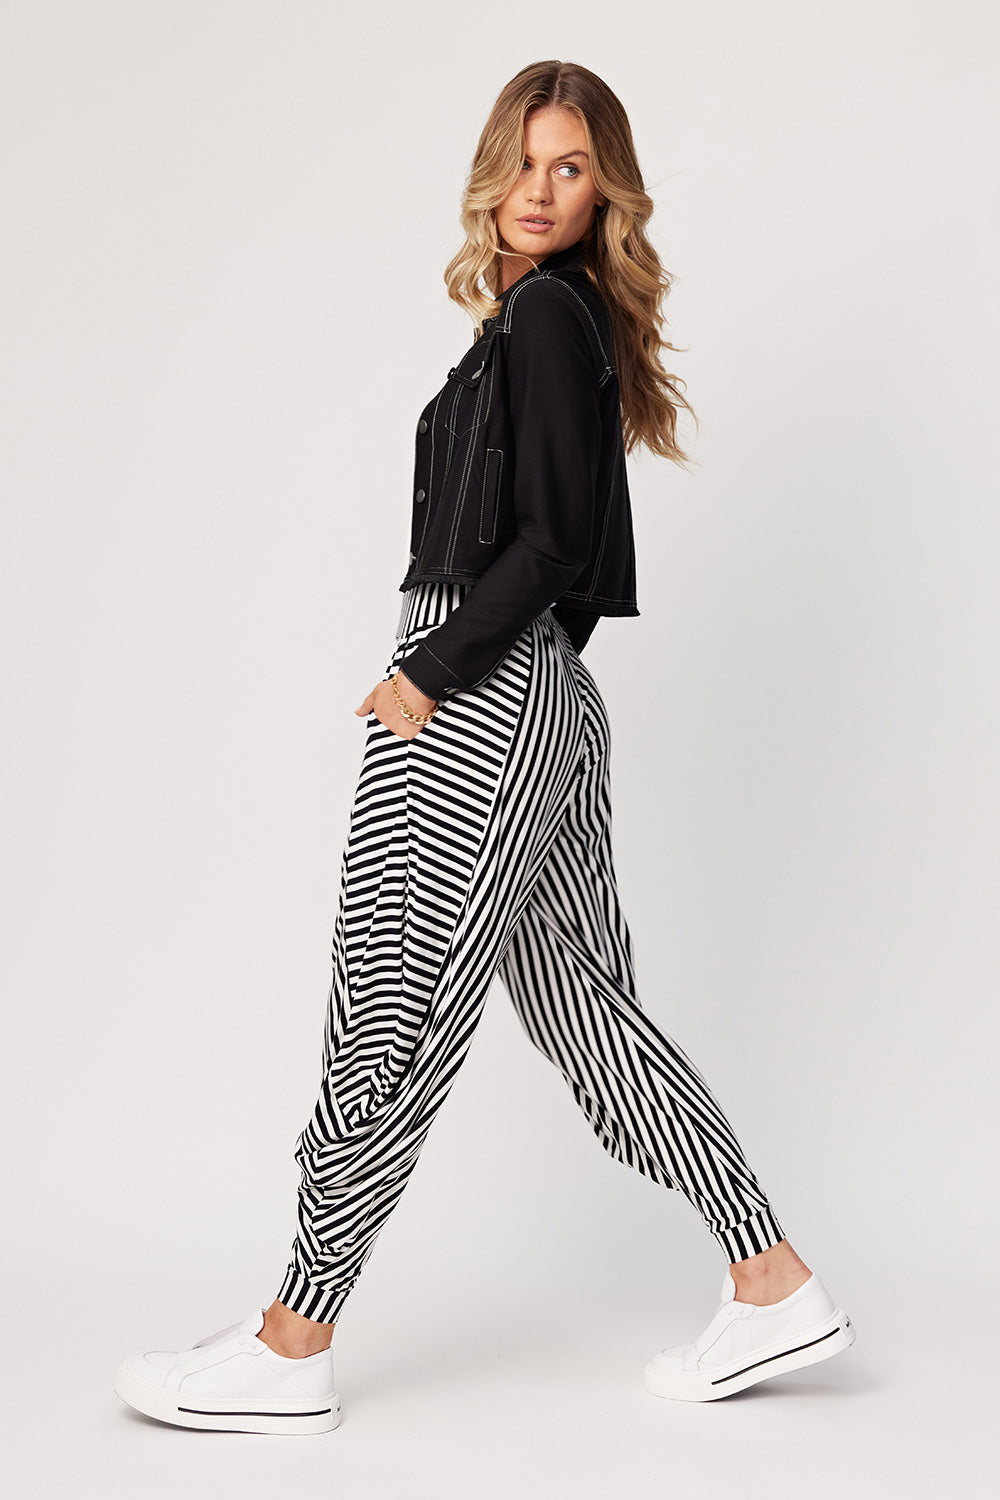 Heidi Stretchy Tapered Cotton Jogger Pants - Black/White Stripe